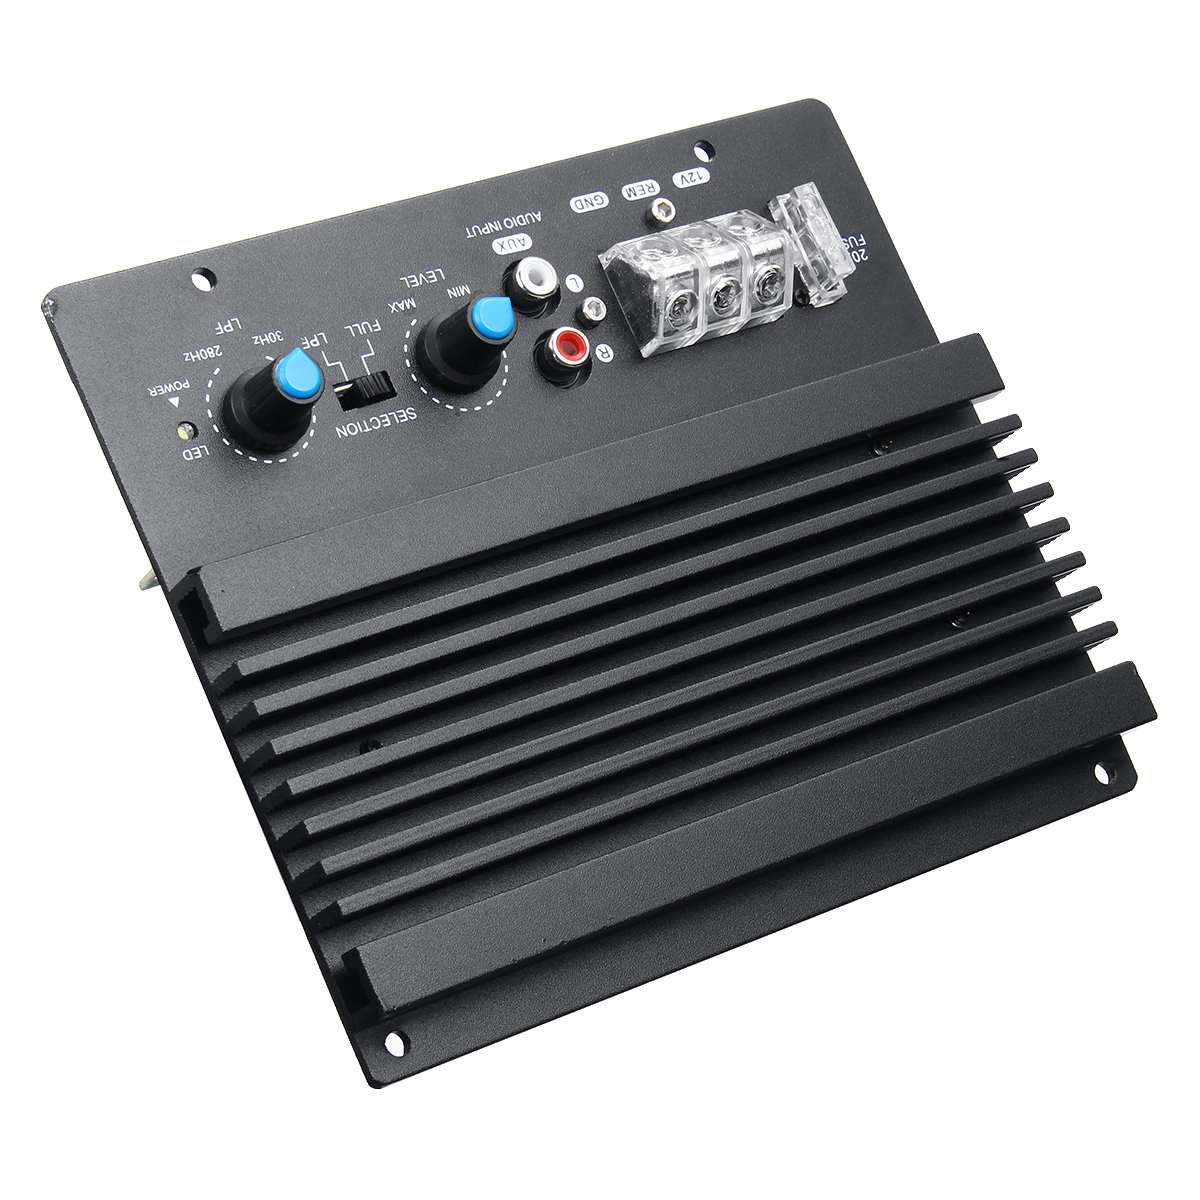 Wayfairmarket 13998-peixll 12 V 600 W Mono Car Audio Subwoofer Amplifier Board  